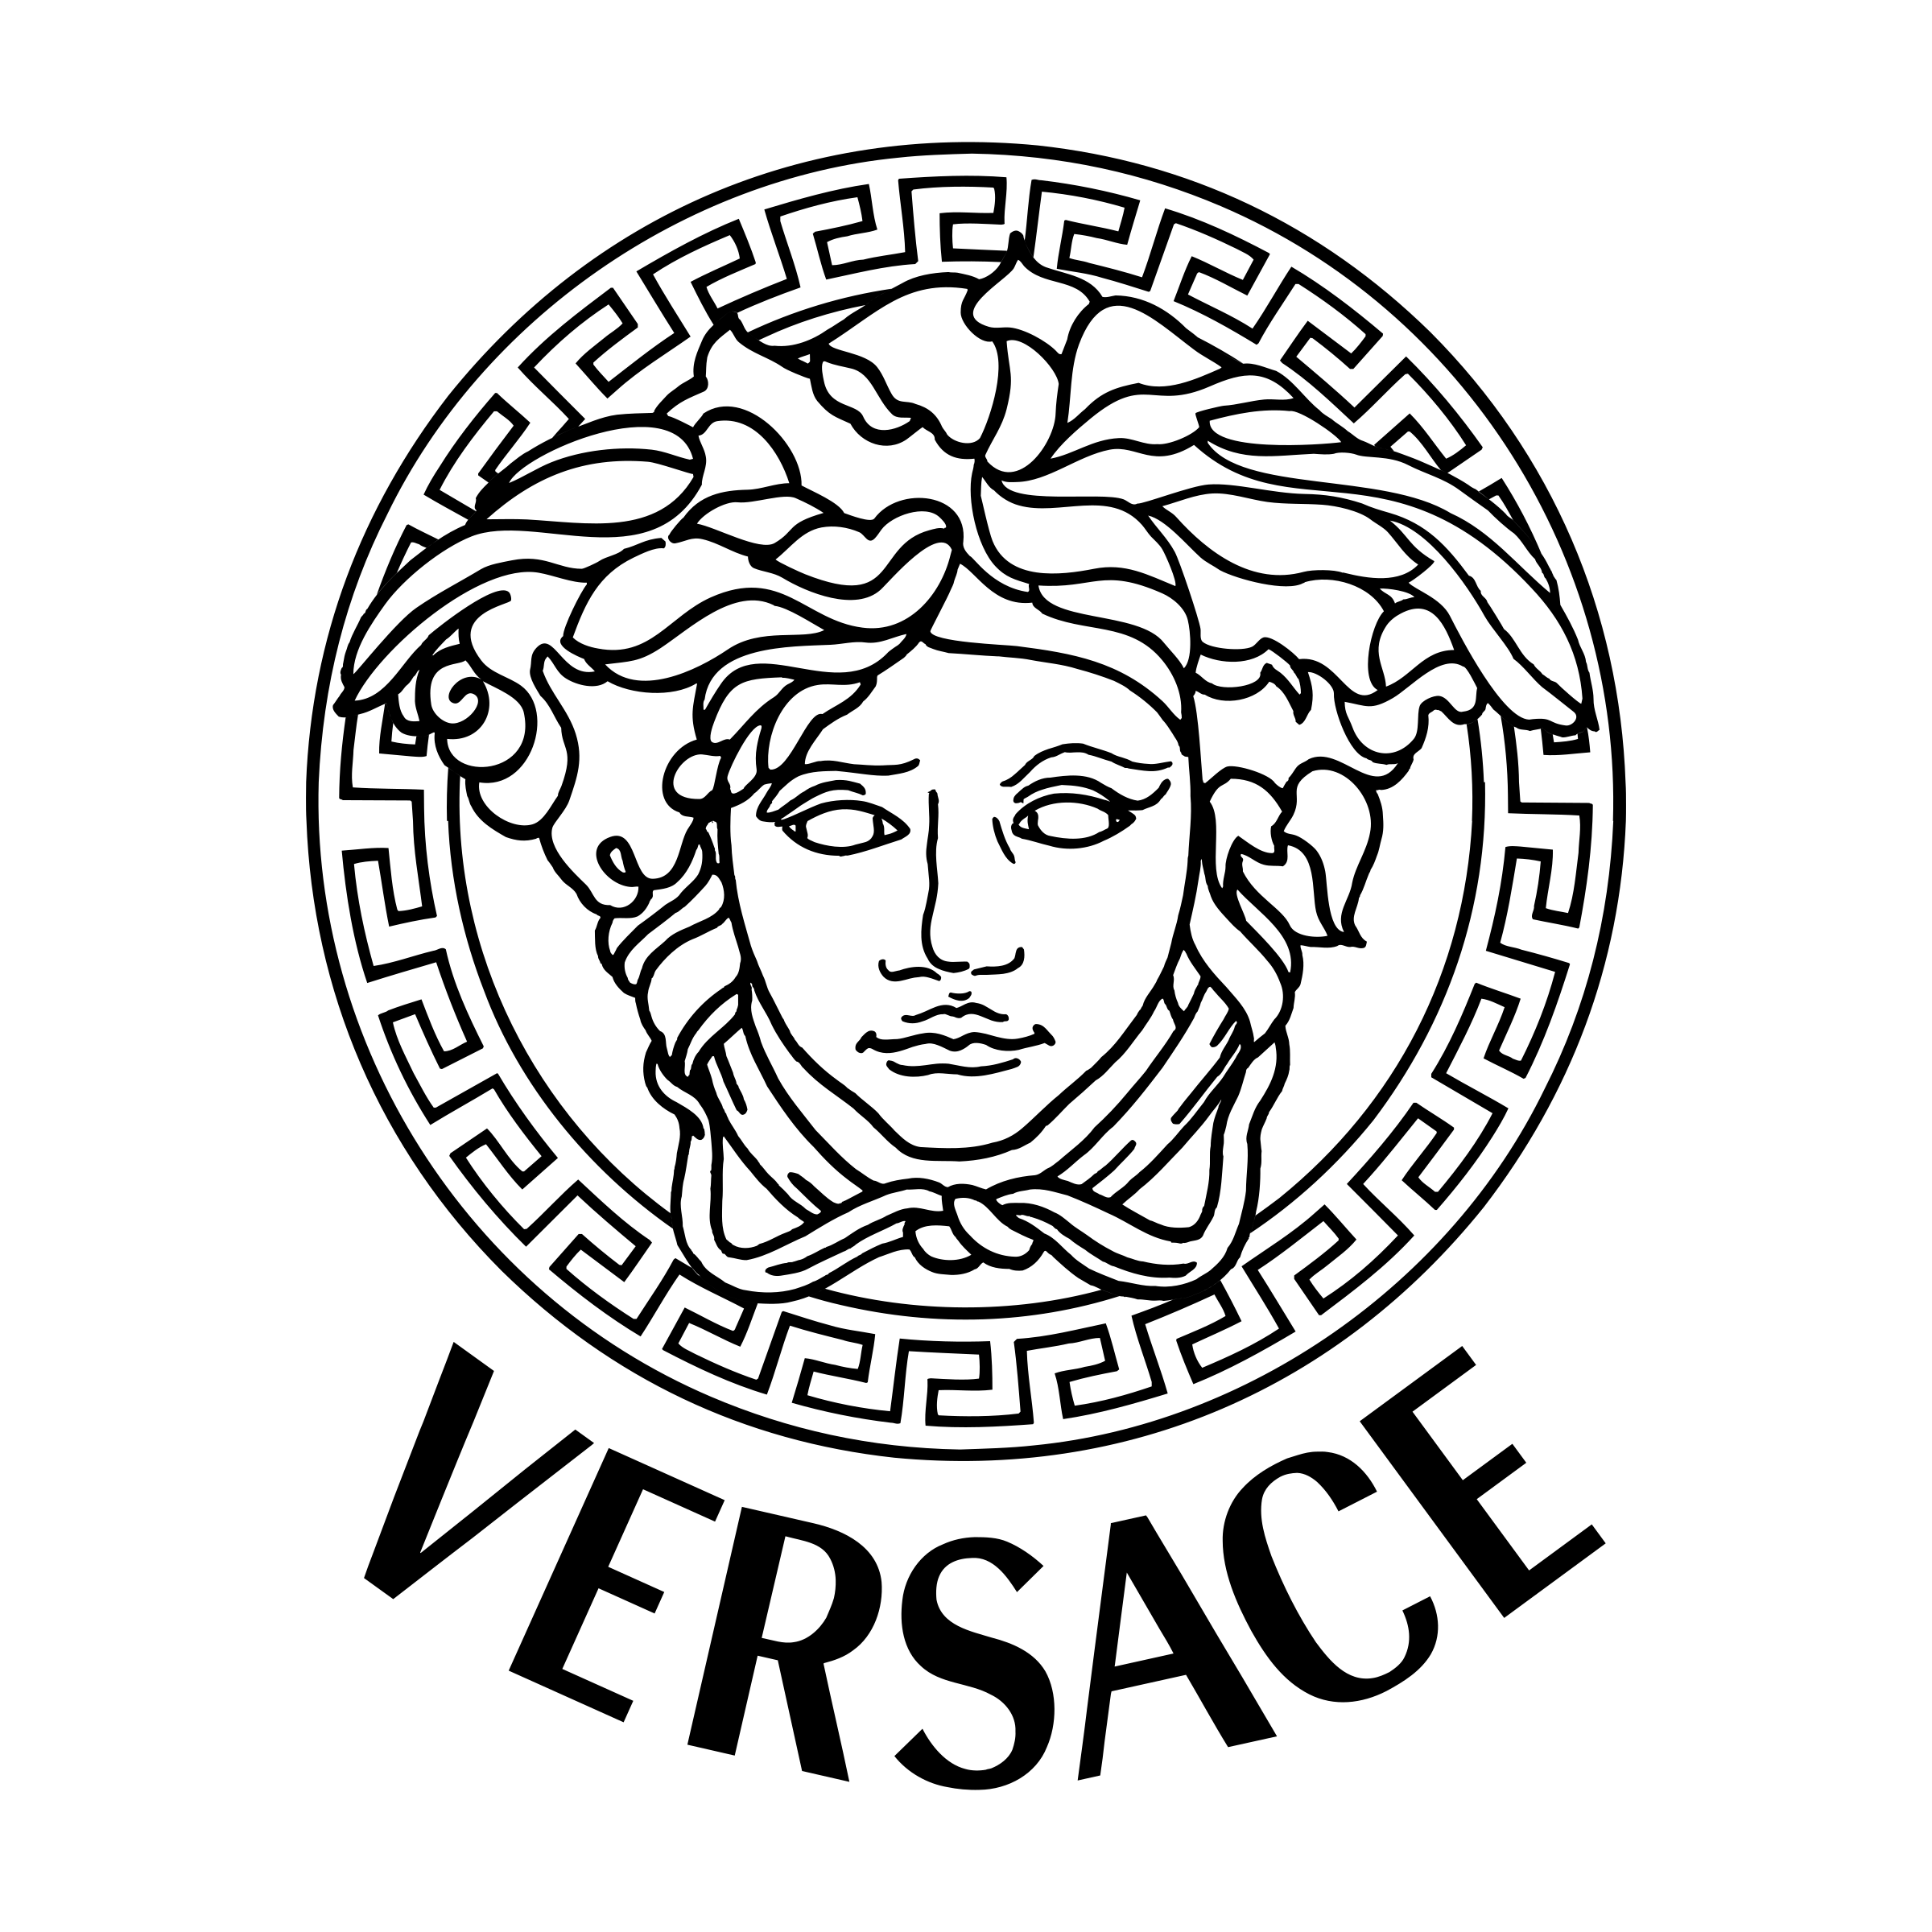 Medusa Logo - Versace Medusa Logo PNG Transparent & SVG Vector - Freebie Supply